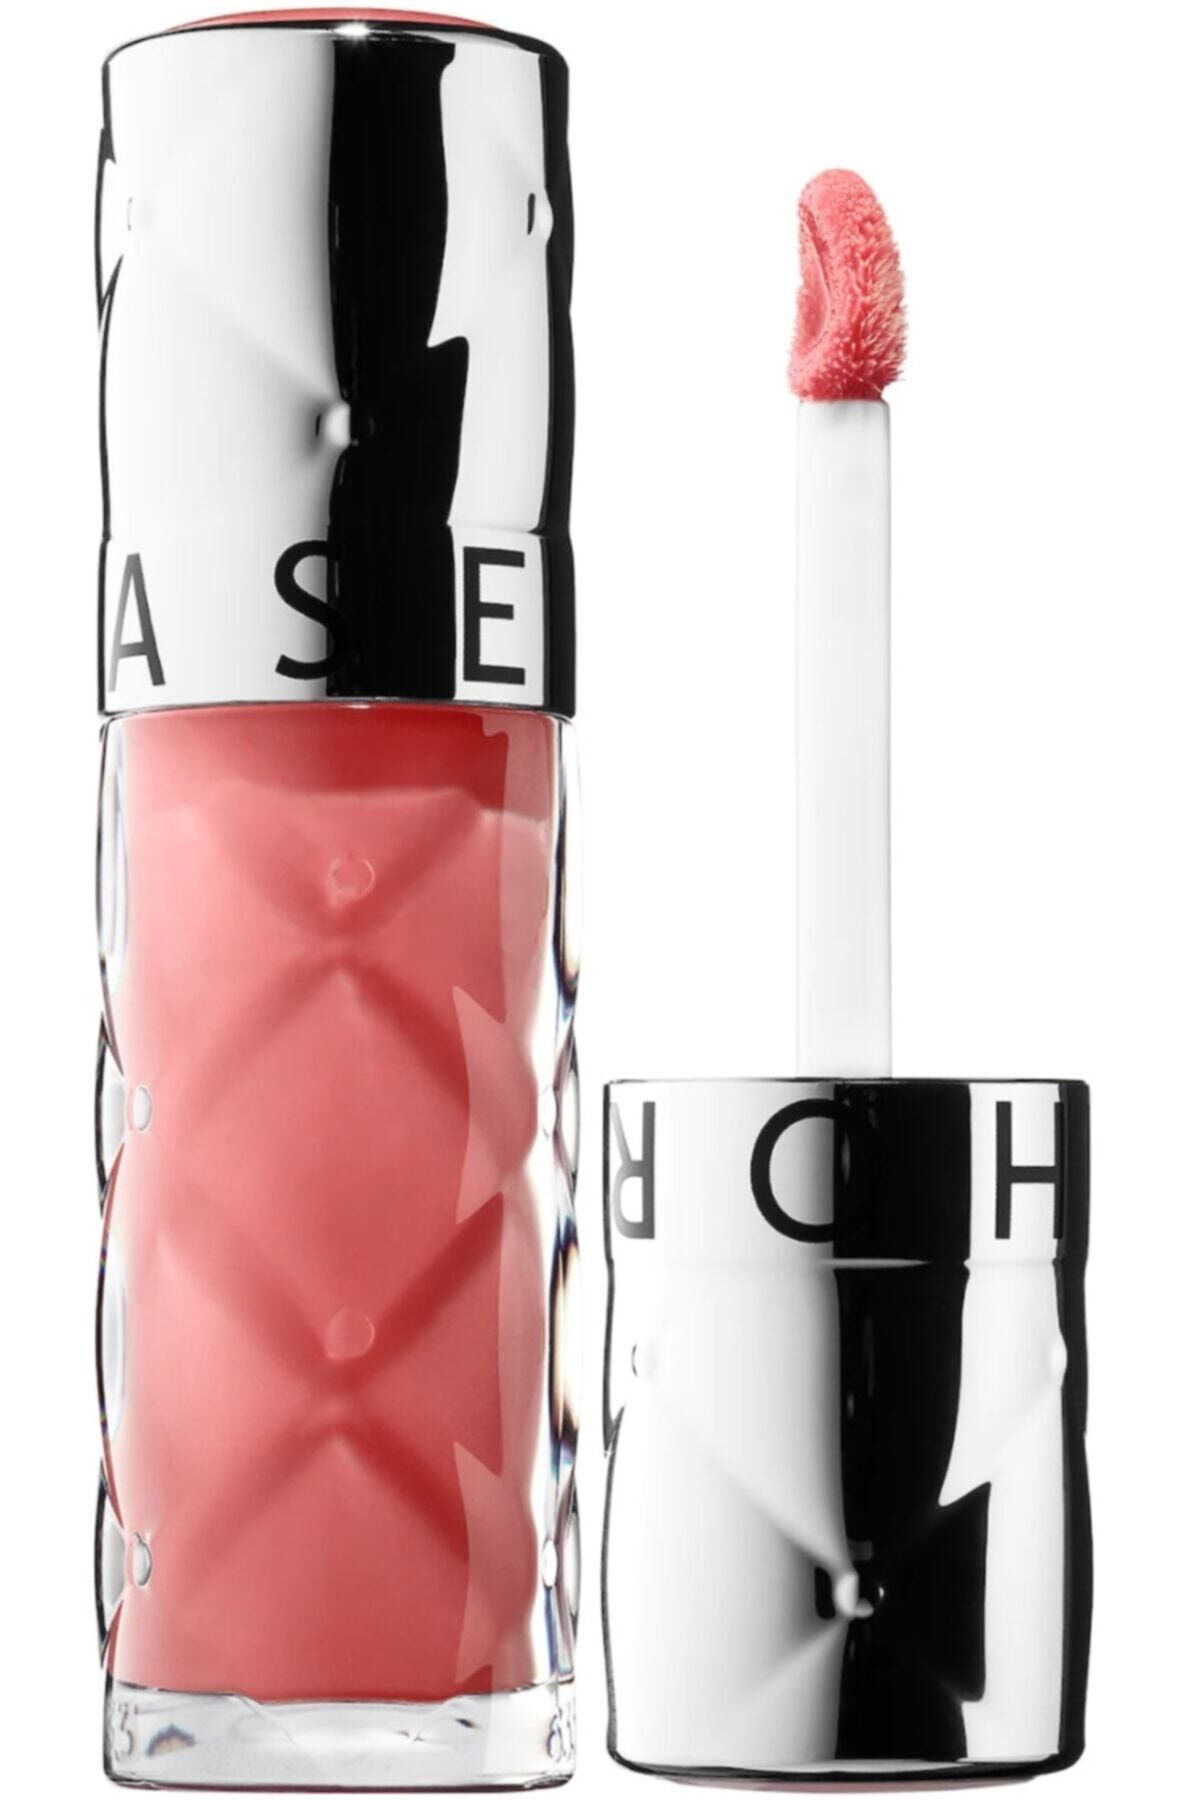 Sephora Outrageous Plumping Lip Gloss